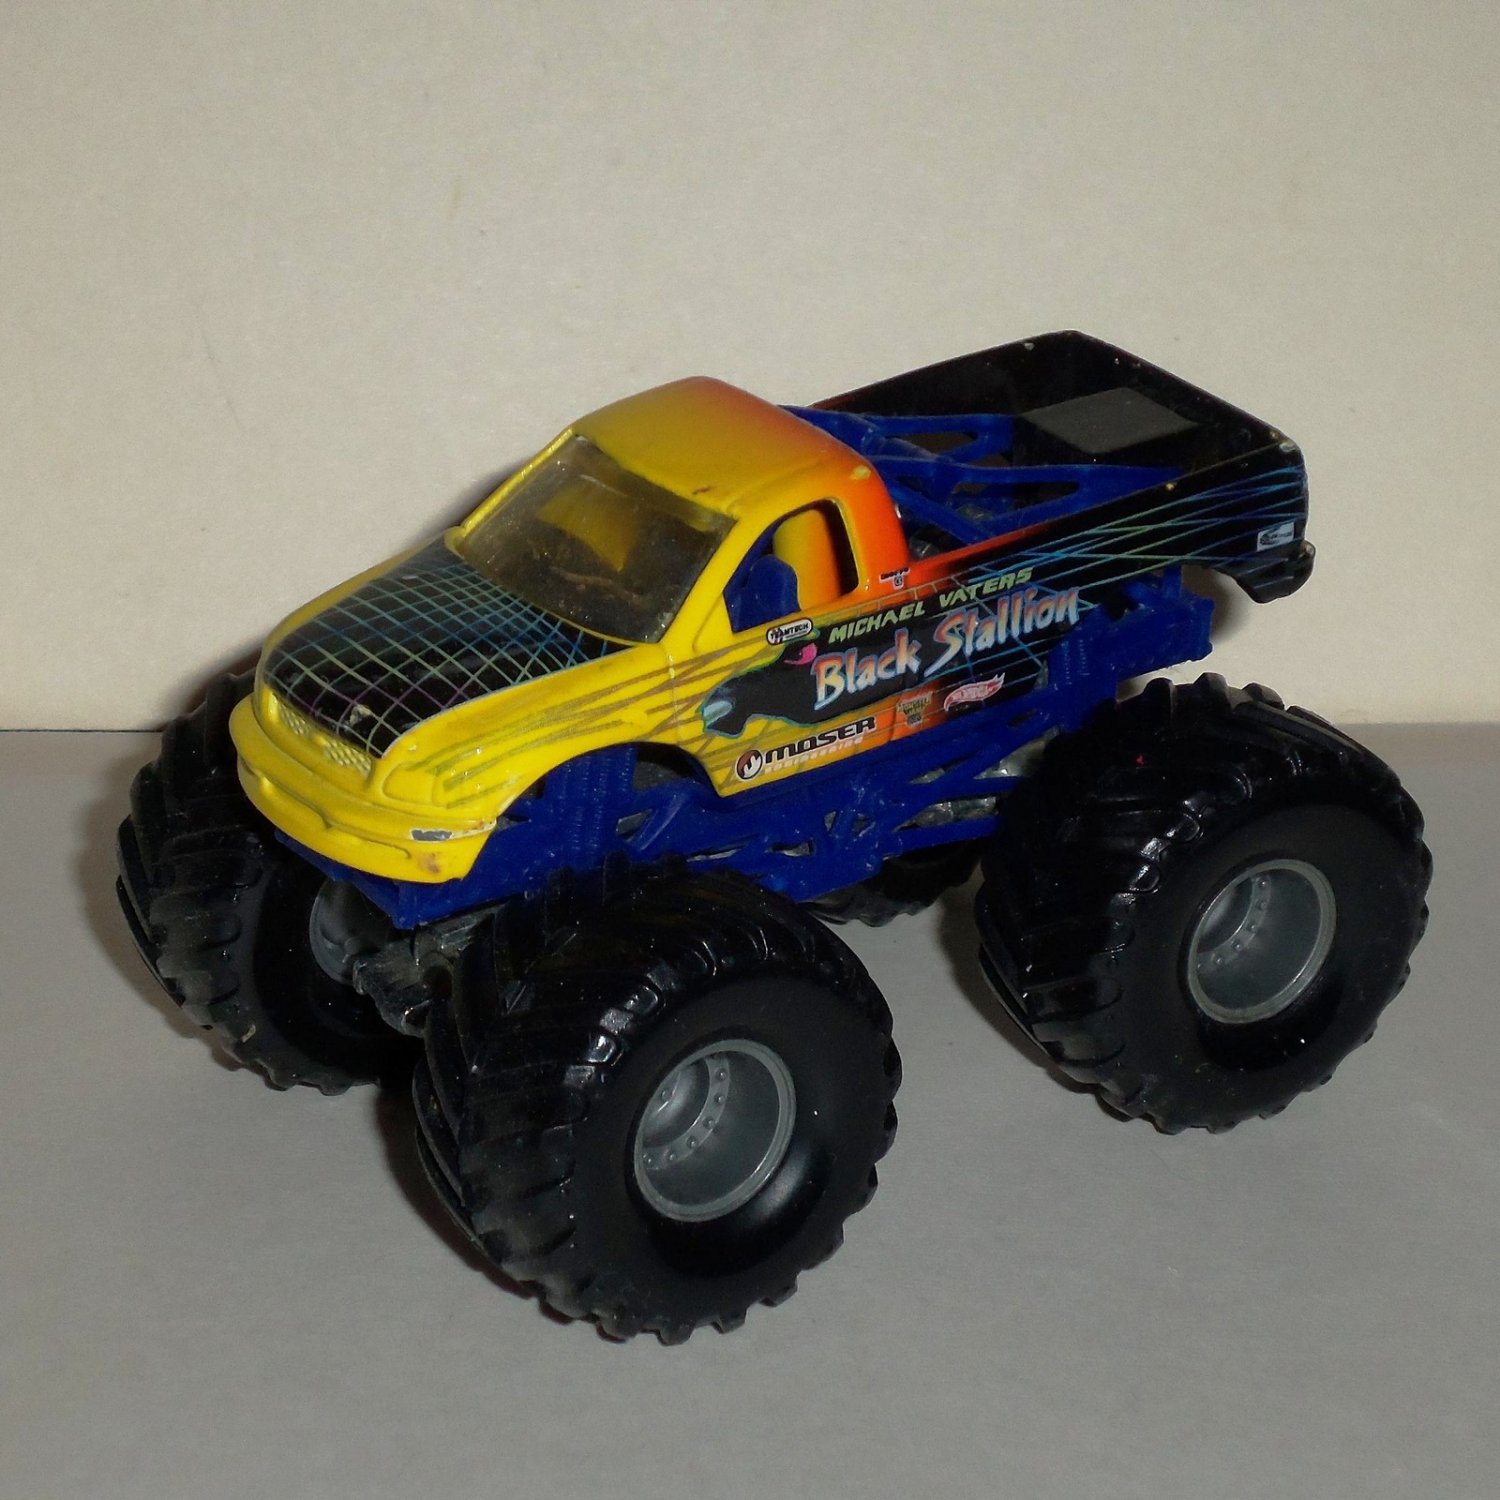 Original Hot Wheels Monster Suit Car 1/64 Diecast Model Car Toy